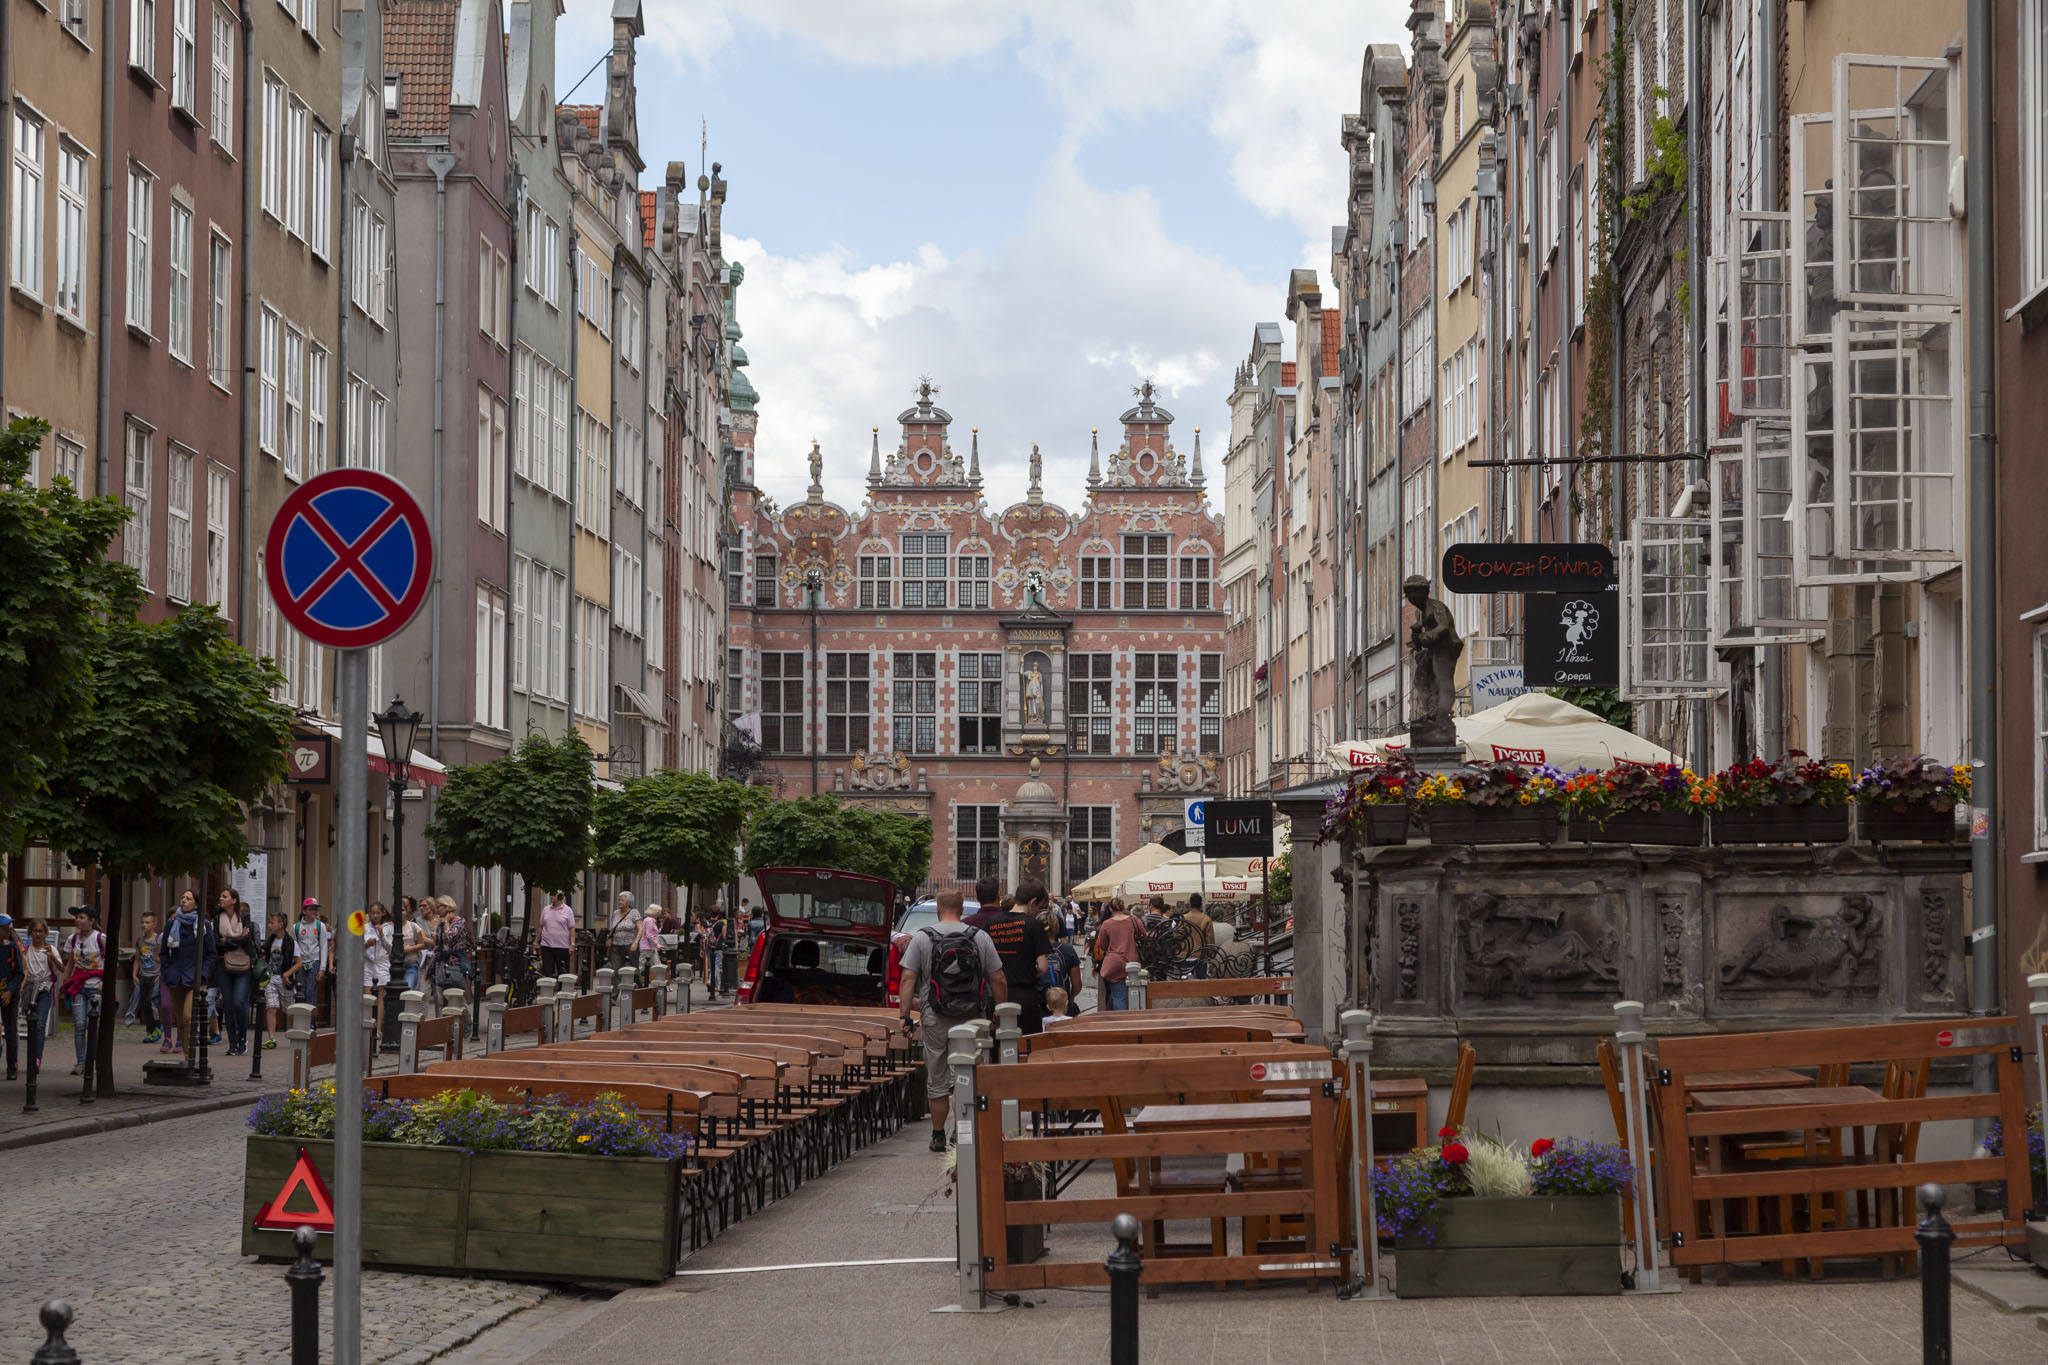 Gdańsk Long Market